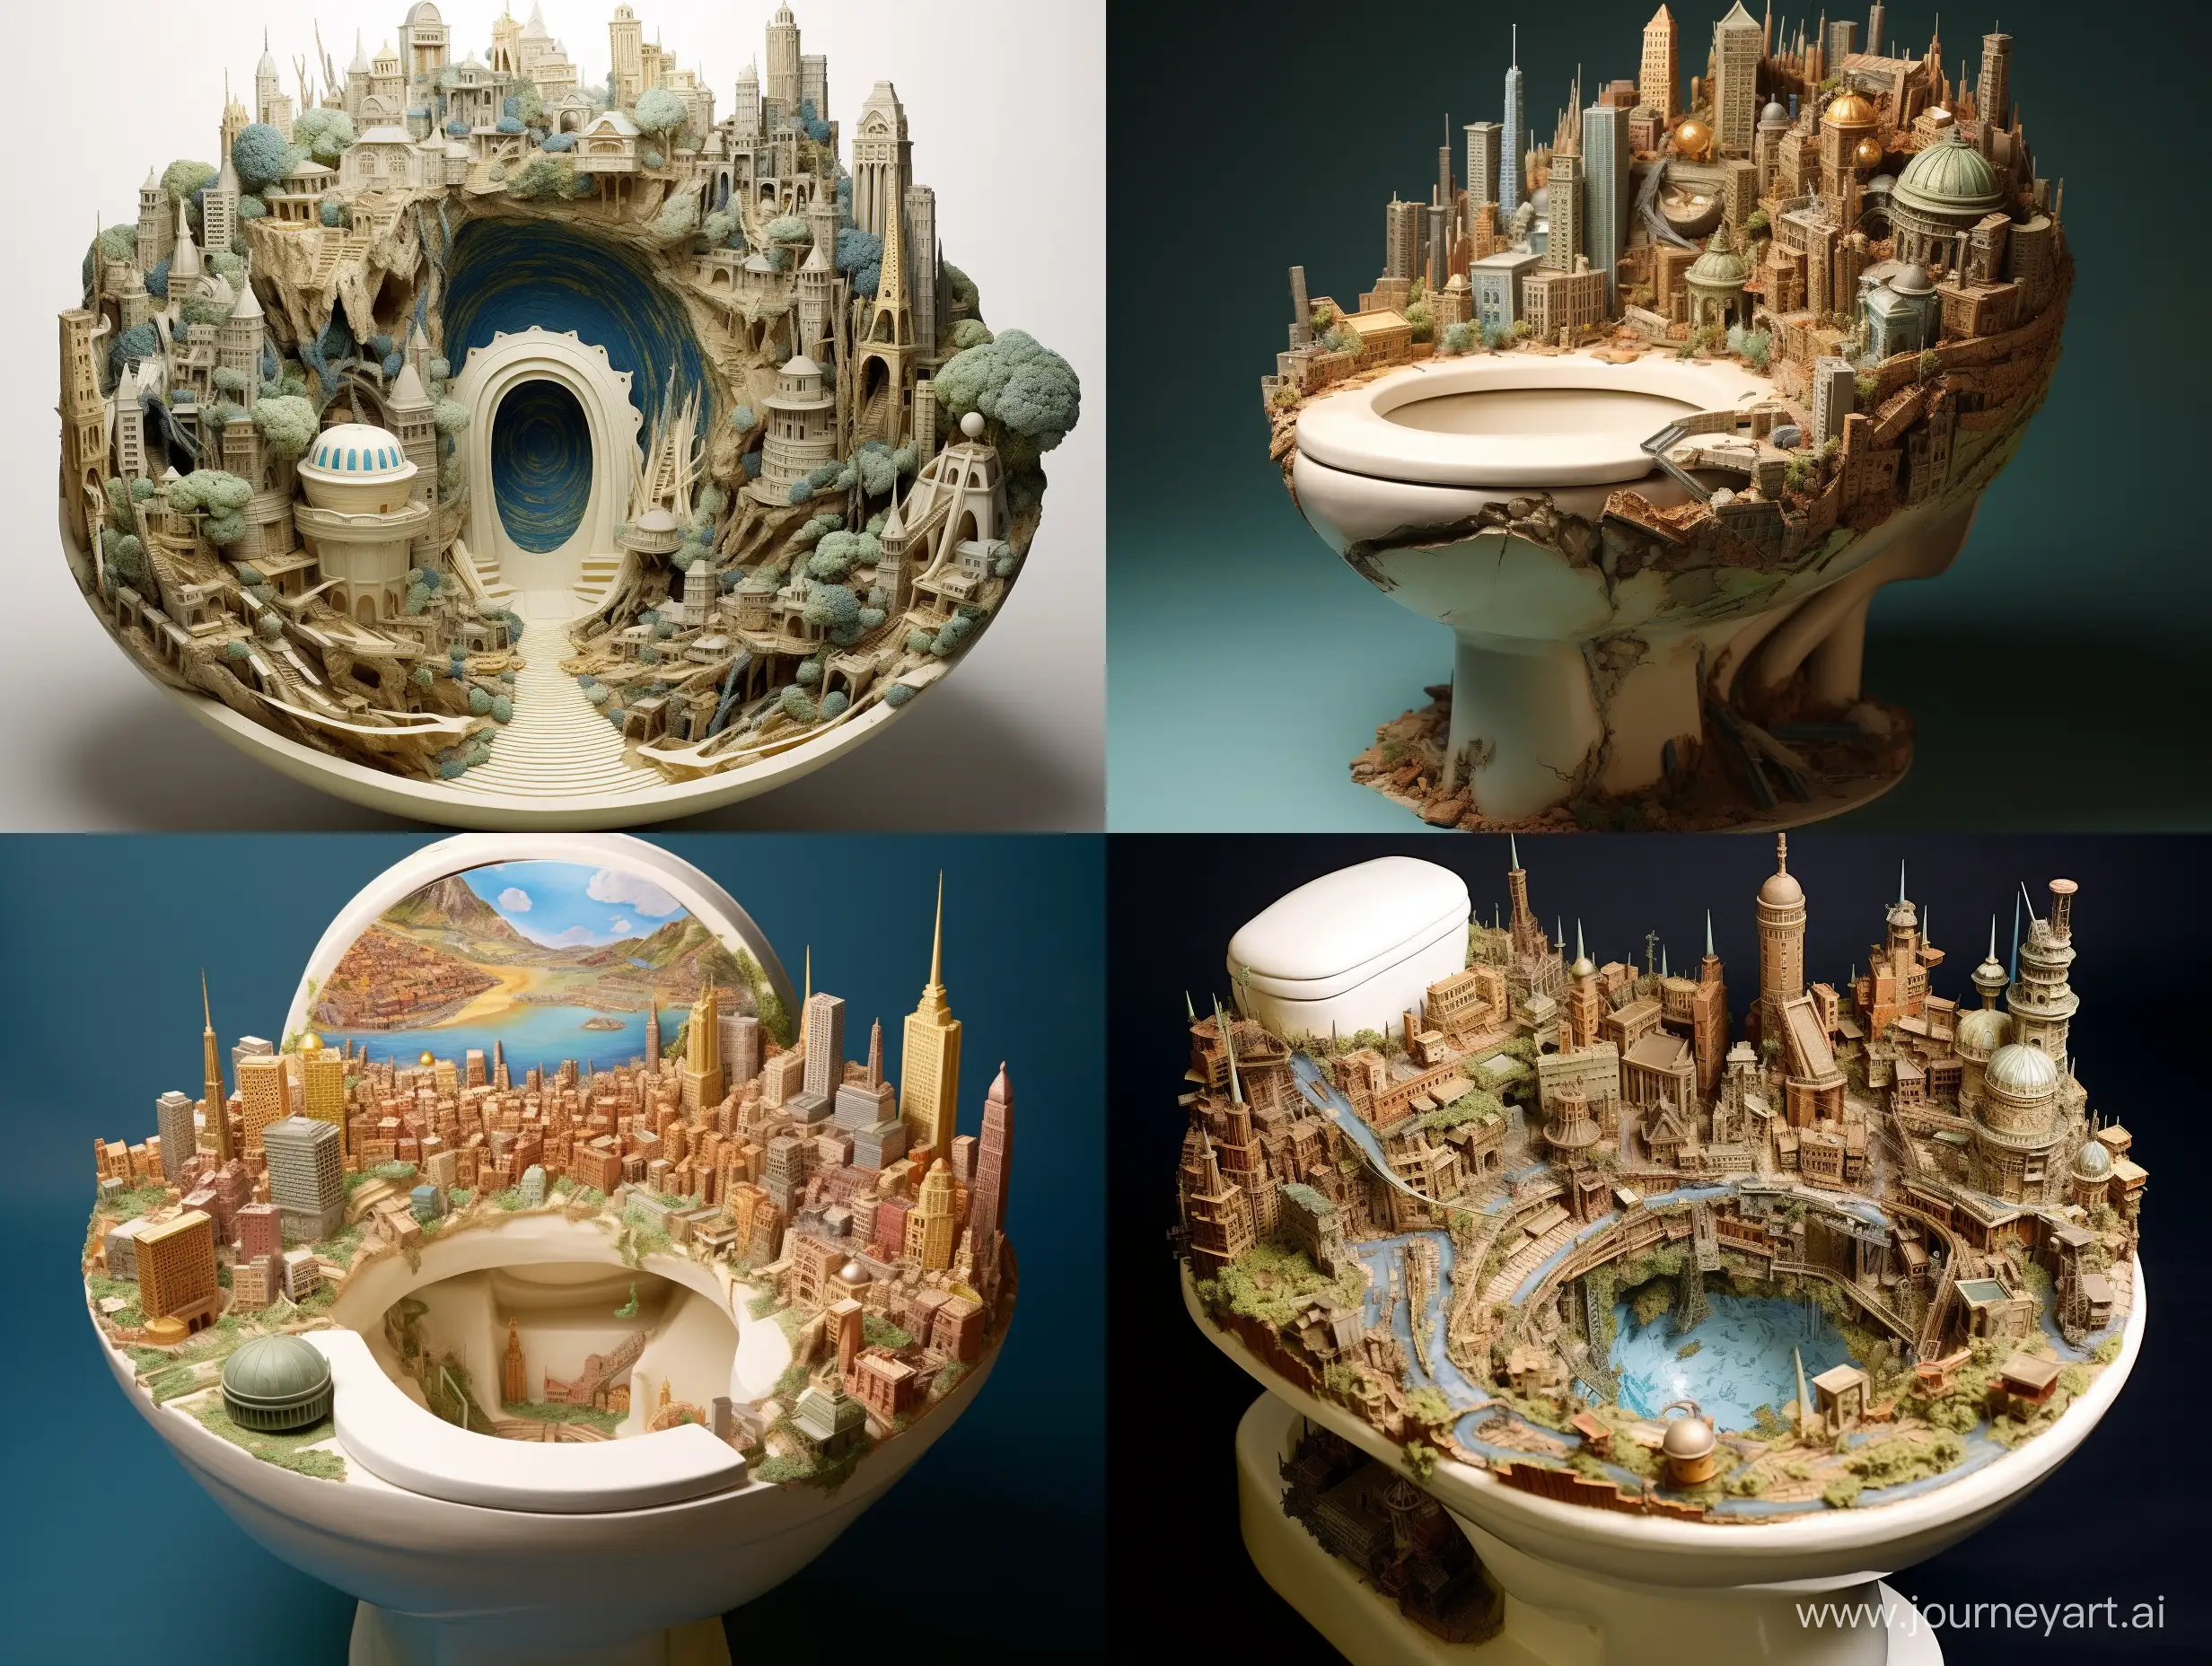 Intricate-Miniature-City-and-Advanced-Civilization-Emerges-in-Unusual-Setting